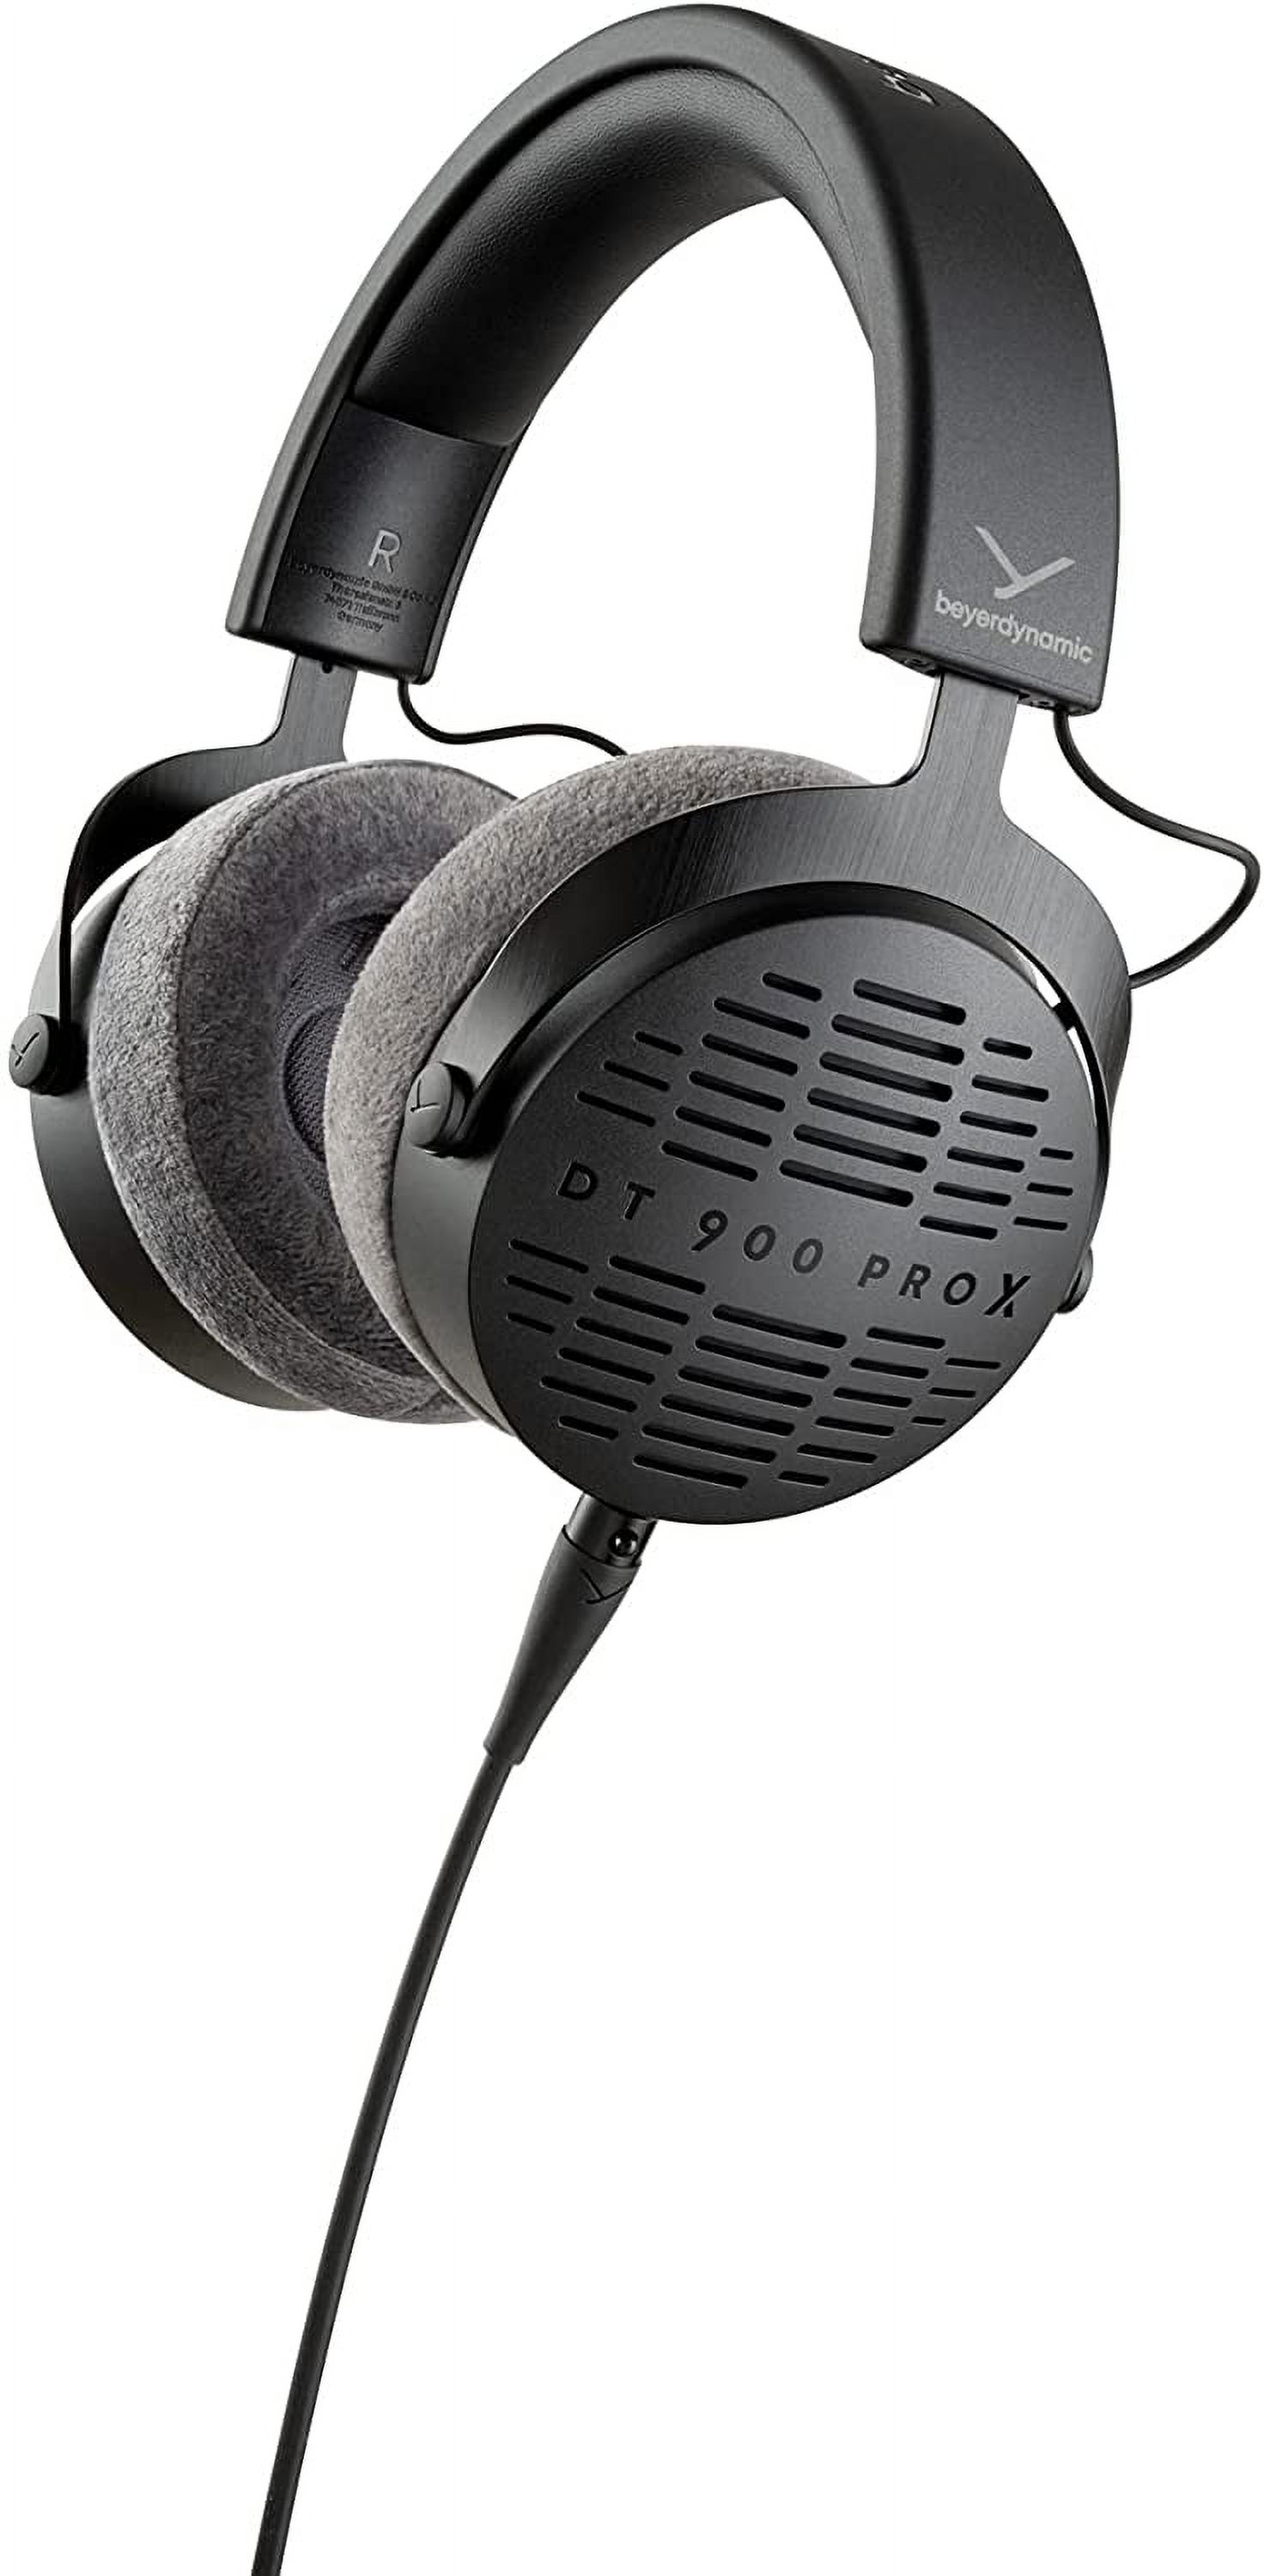 Beyerdynamic DT 900 Pro X Open-back Studio Mixing Headphones - image 1 of 3